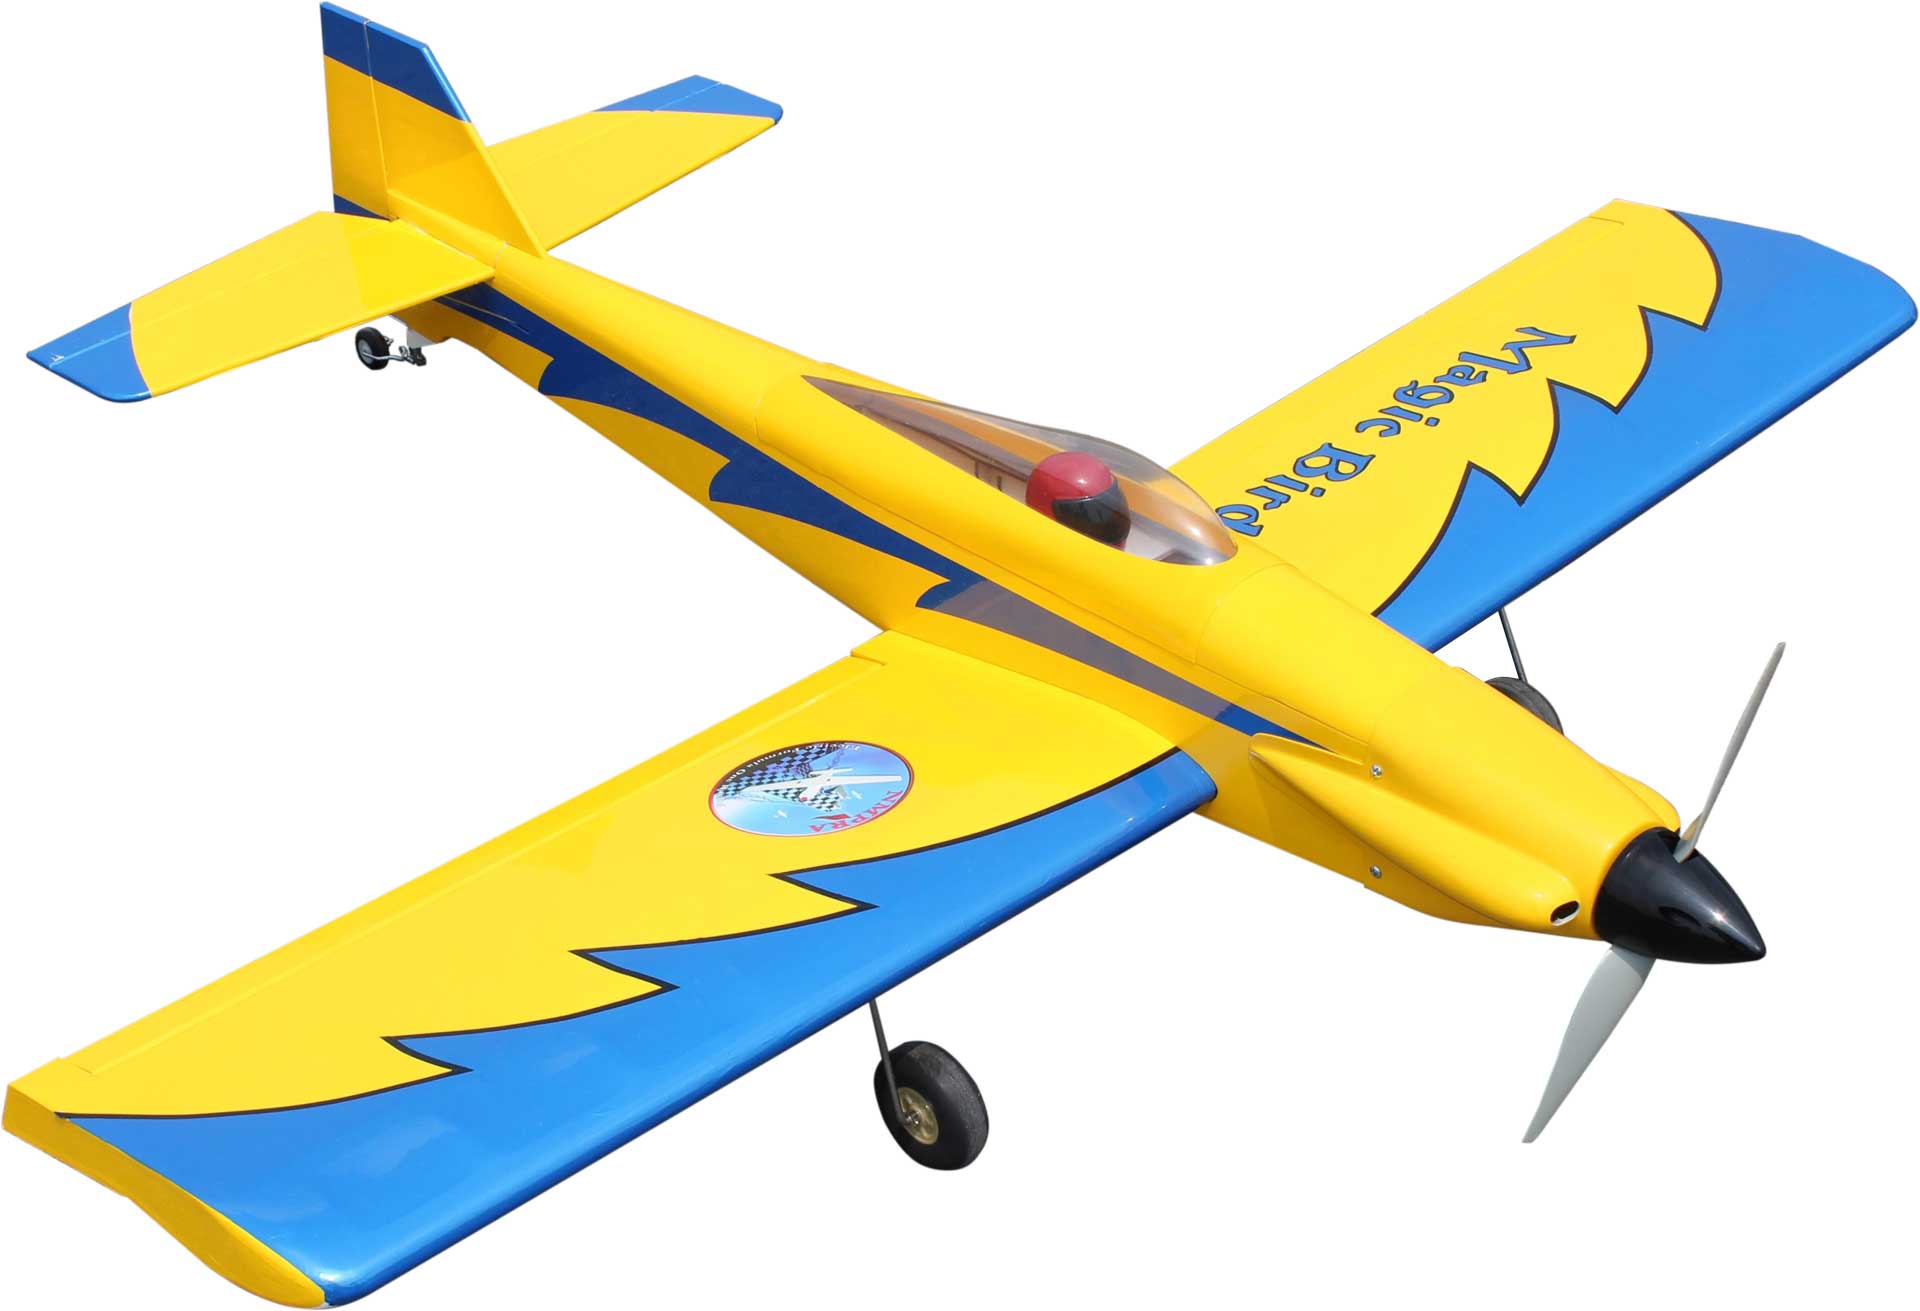 Seagull Models ( SG-Models ) Magic Bird 40e 46" PNP Pylon Racing ARF Modell, mit Dualsky Antrieb, Gelb/Blau